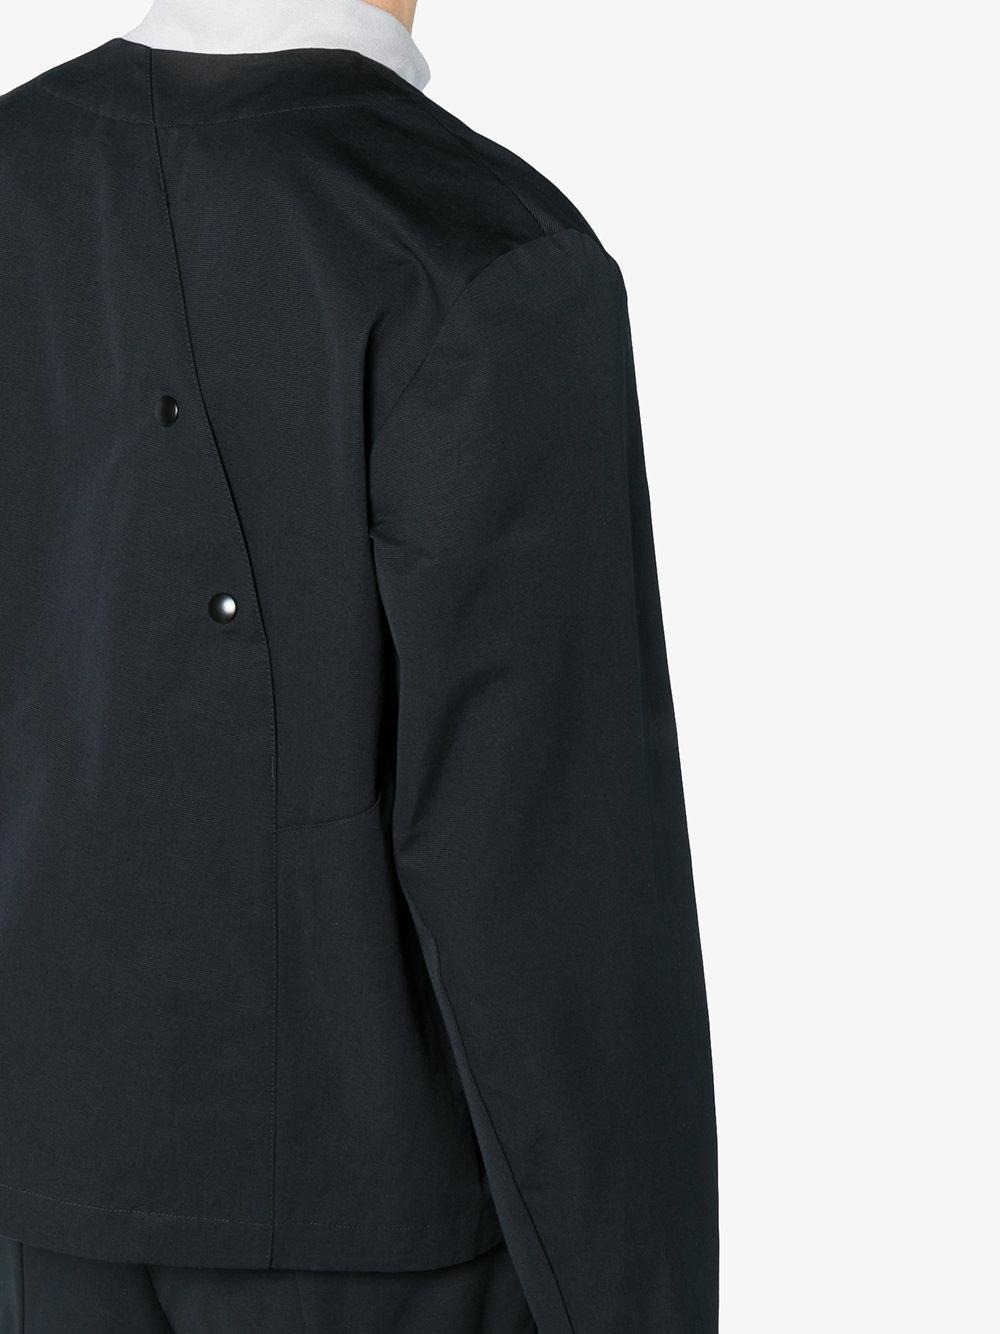 Kiko kostadinov cubist jacket XL